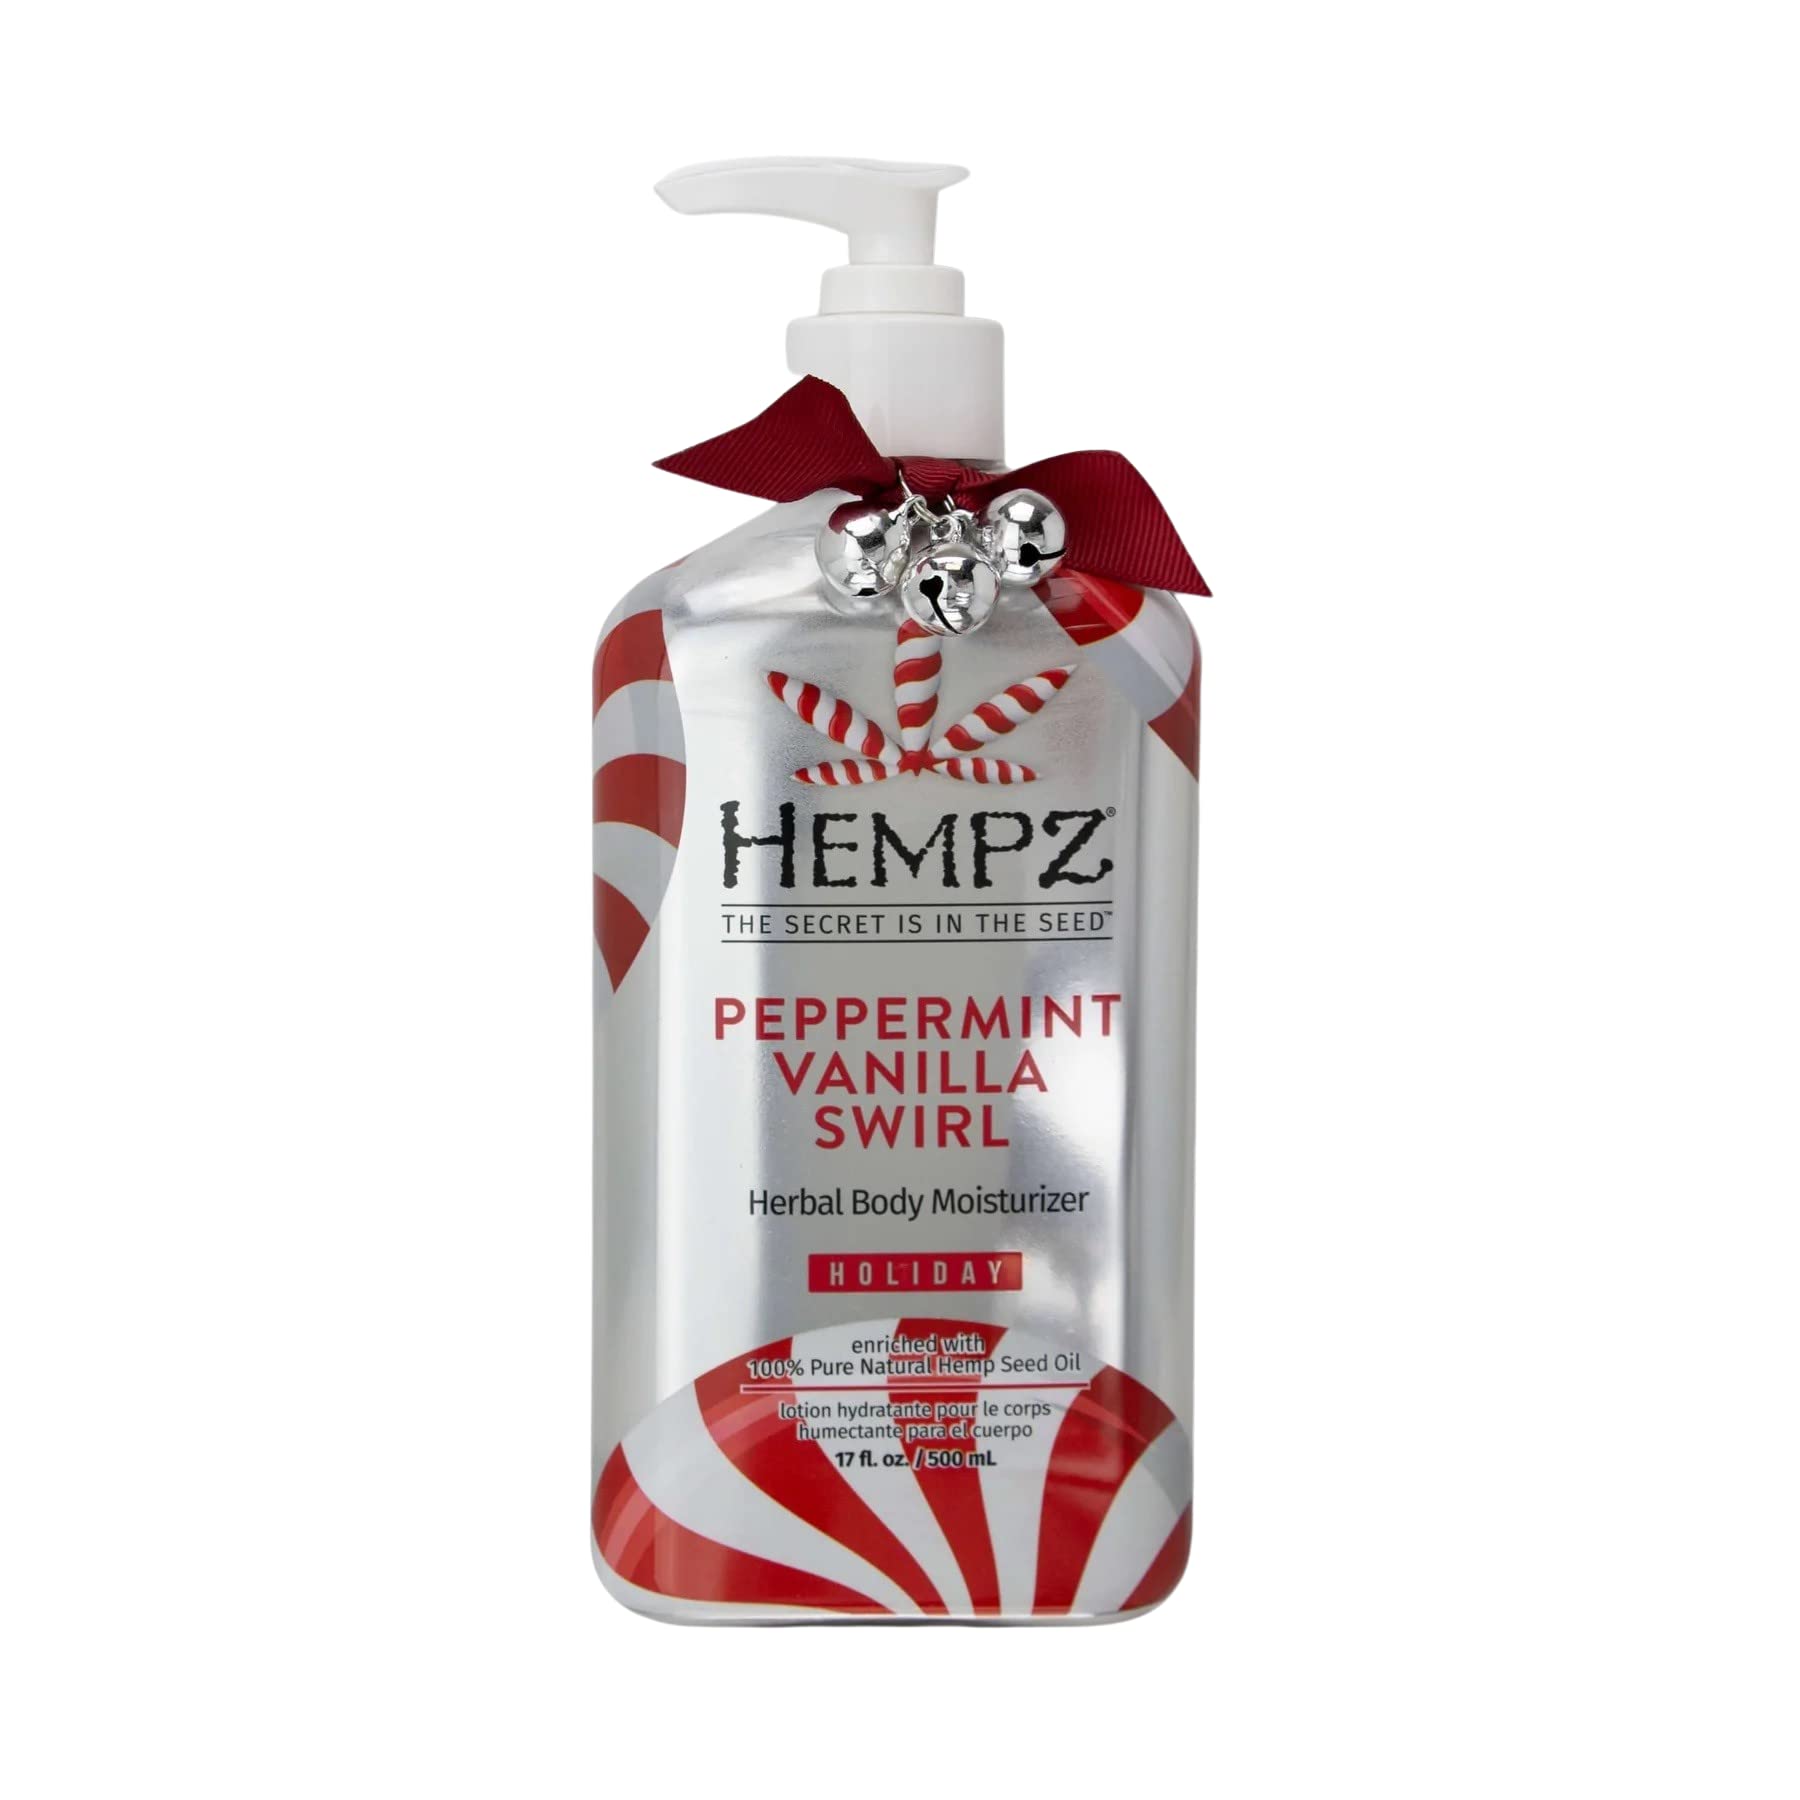 Hempz Limited Edition Peppermint Vanilla Swirl Herbal Body Moisturizer